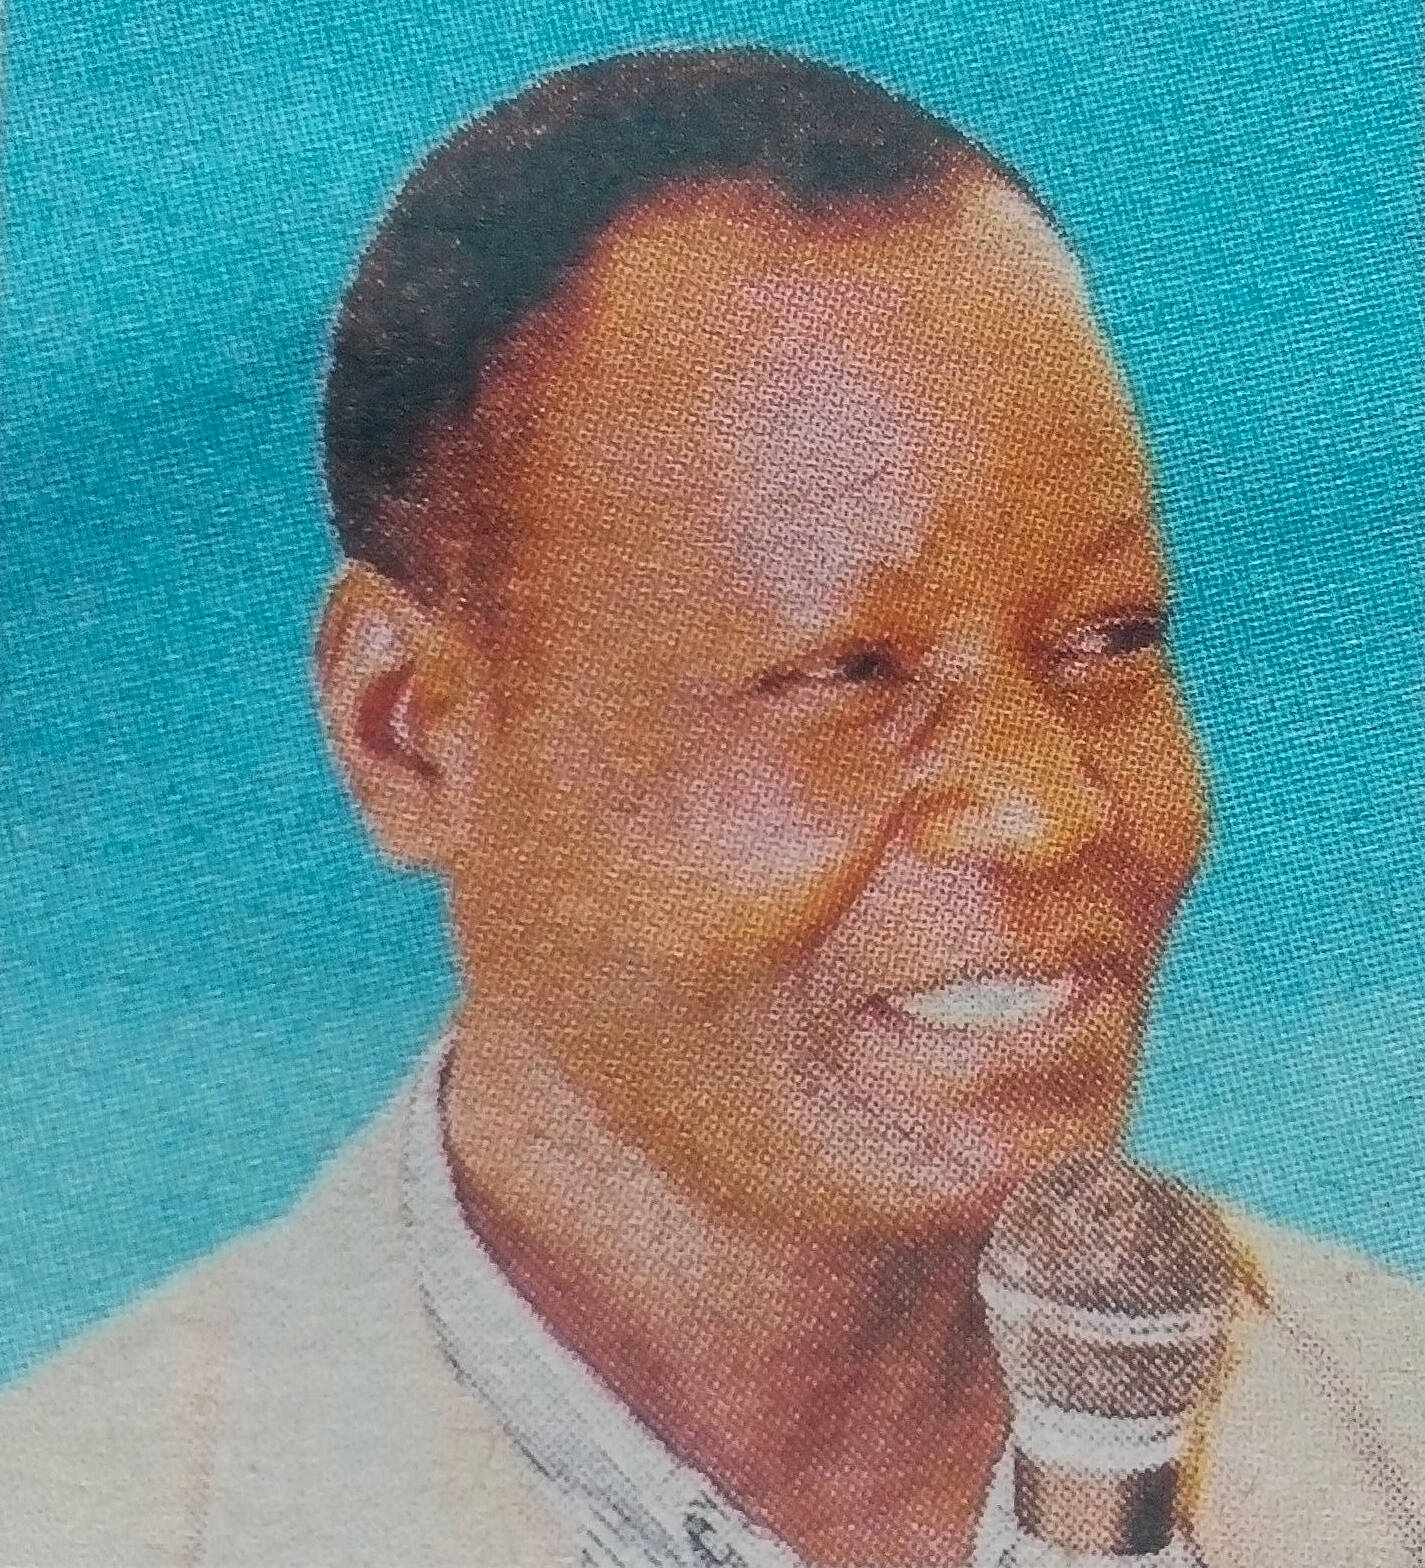 Obituary Image of Douglas Omondi Mohol Born: 1950 - Died: 2017